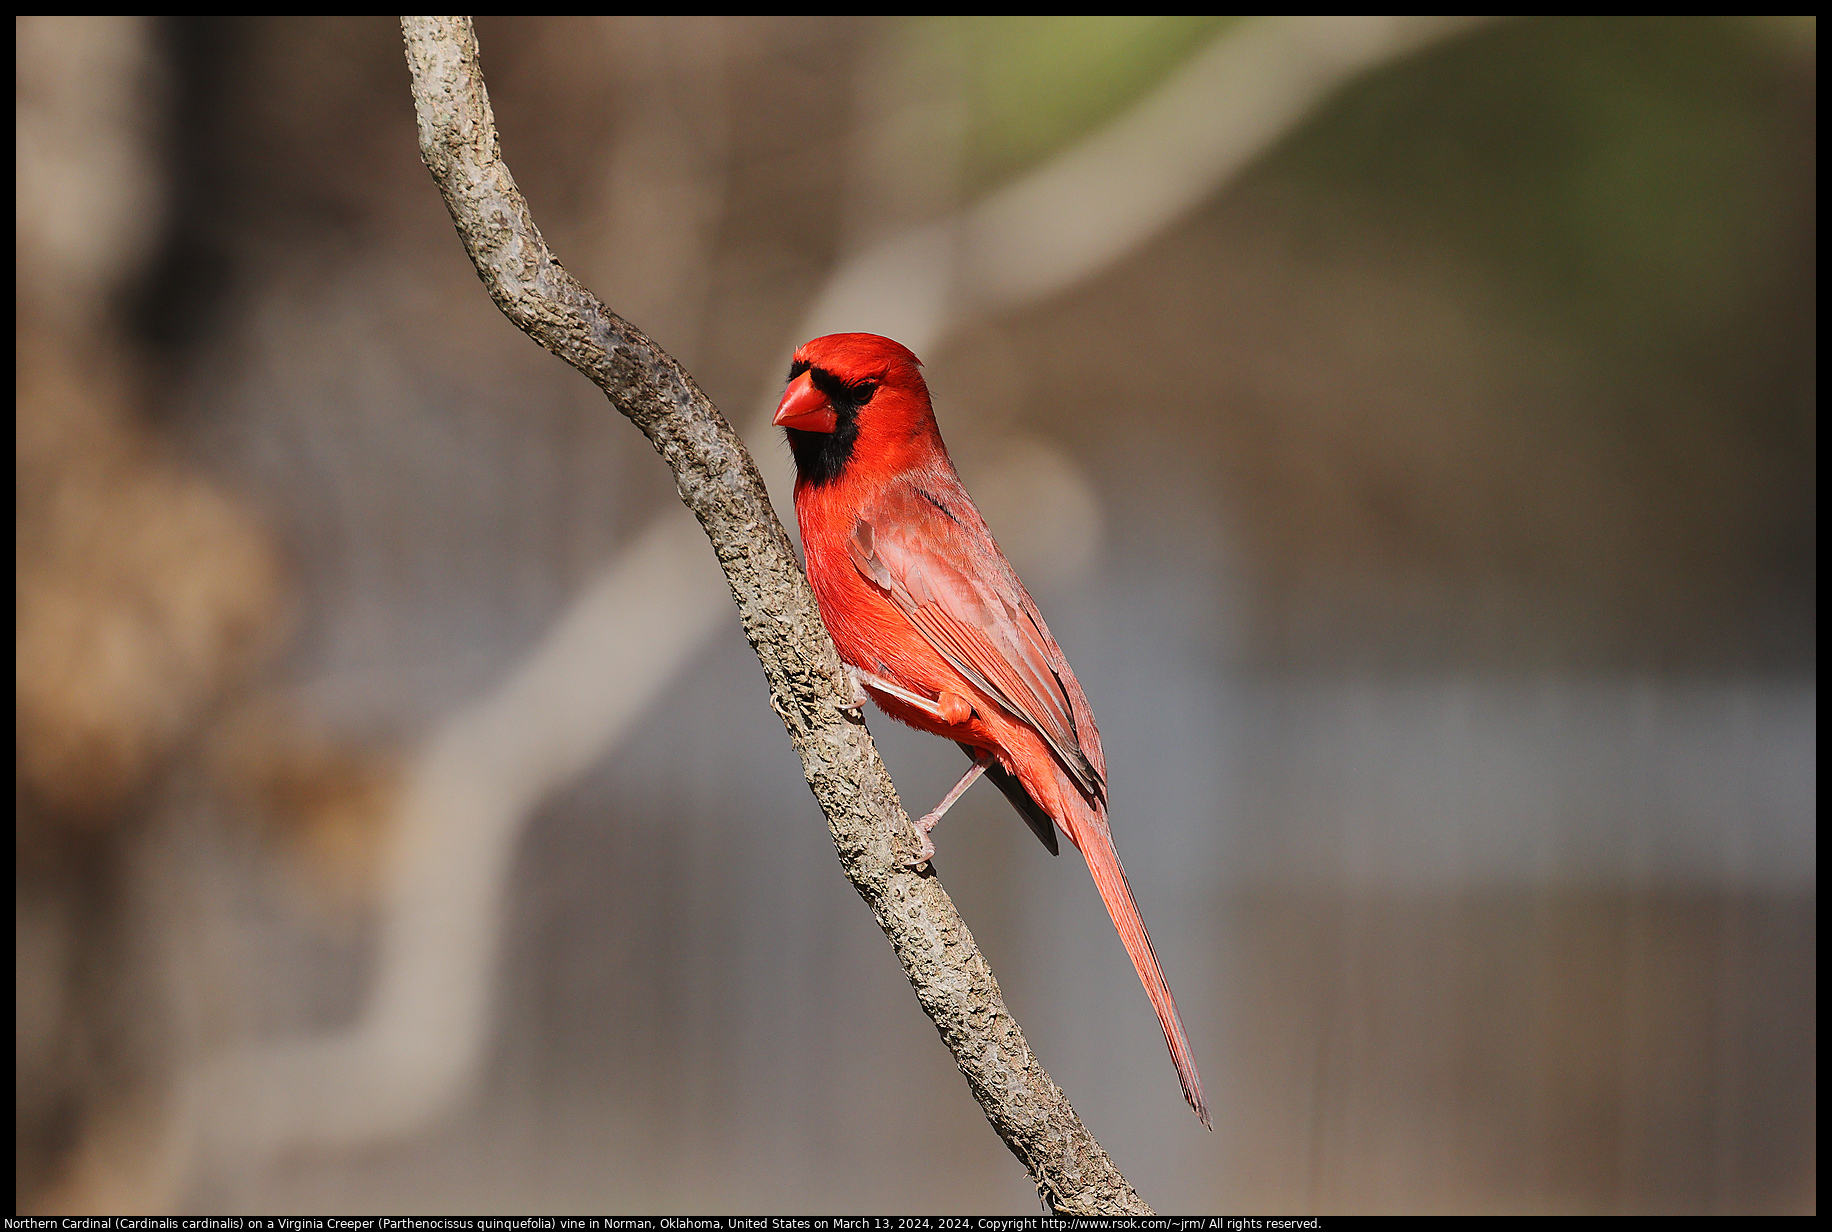 Northern Cardinal (Cardinalis cardinalis) on a Virginia Creeper (Parthenocissus quinquefolia) vine in Norman, Oklahoma, United States on March 13, 2024